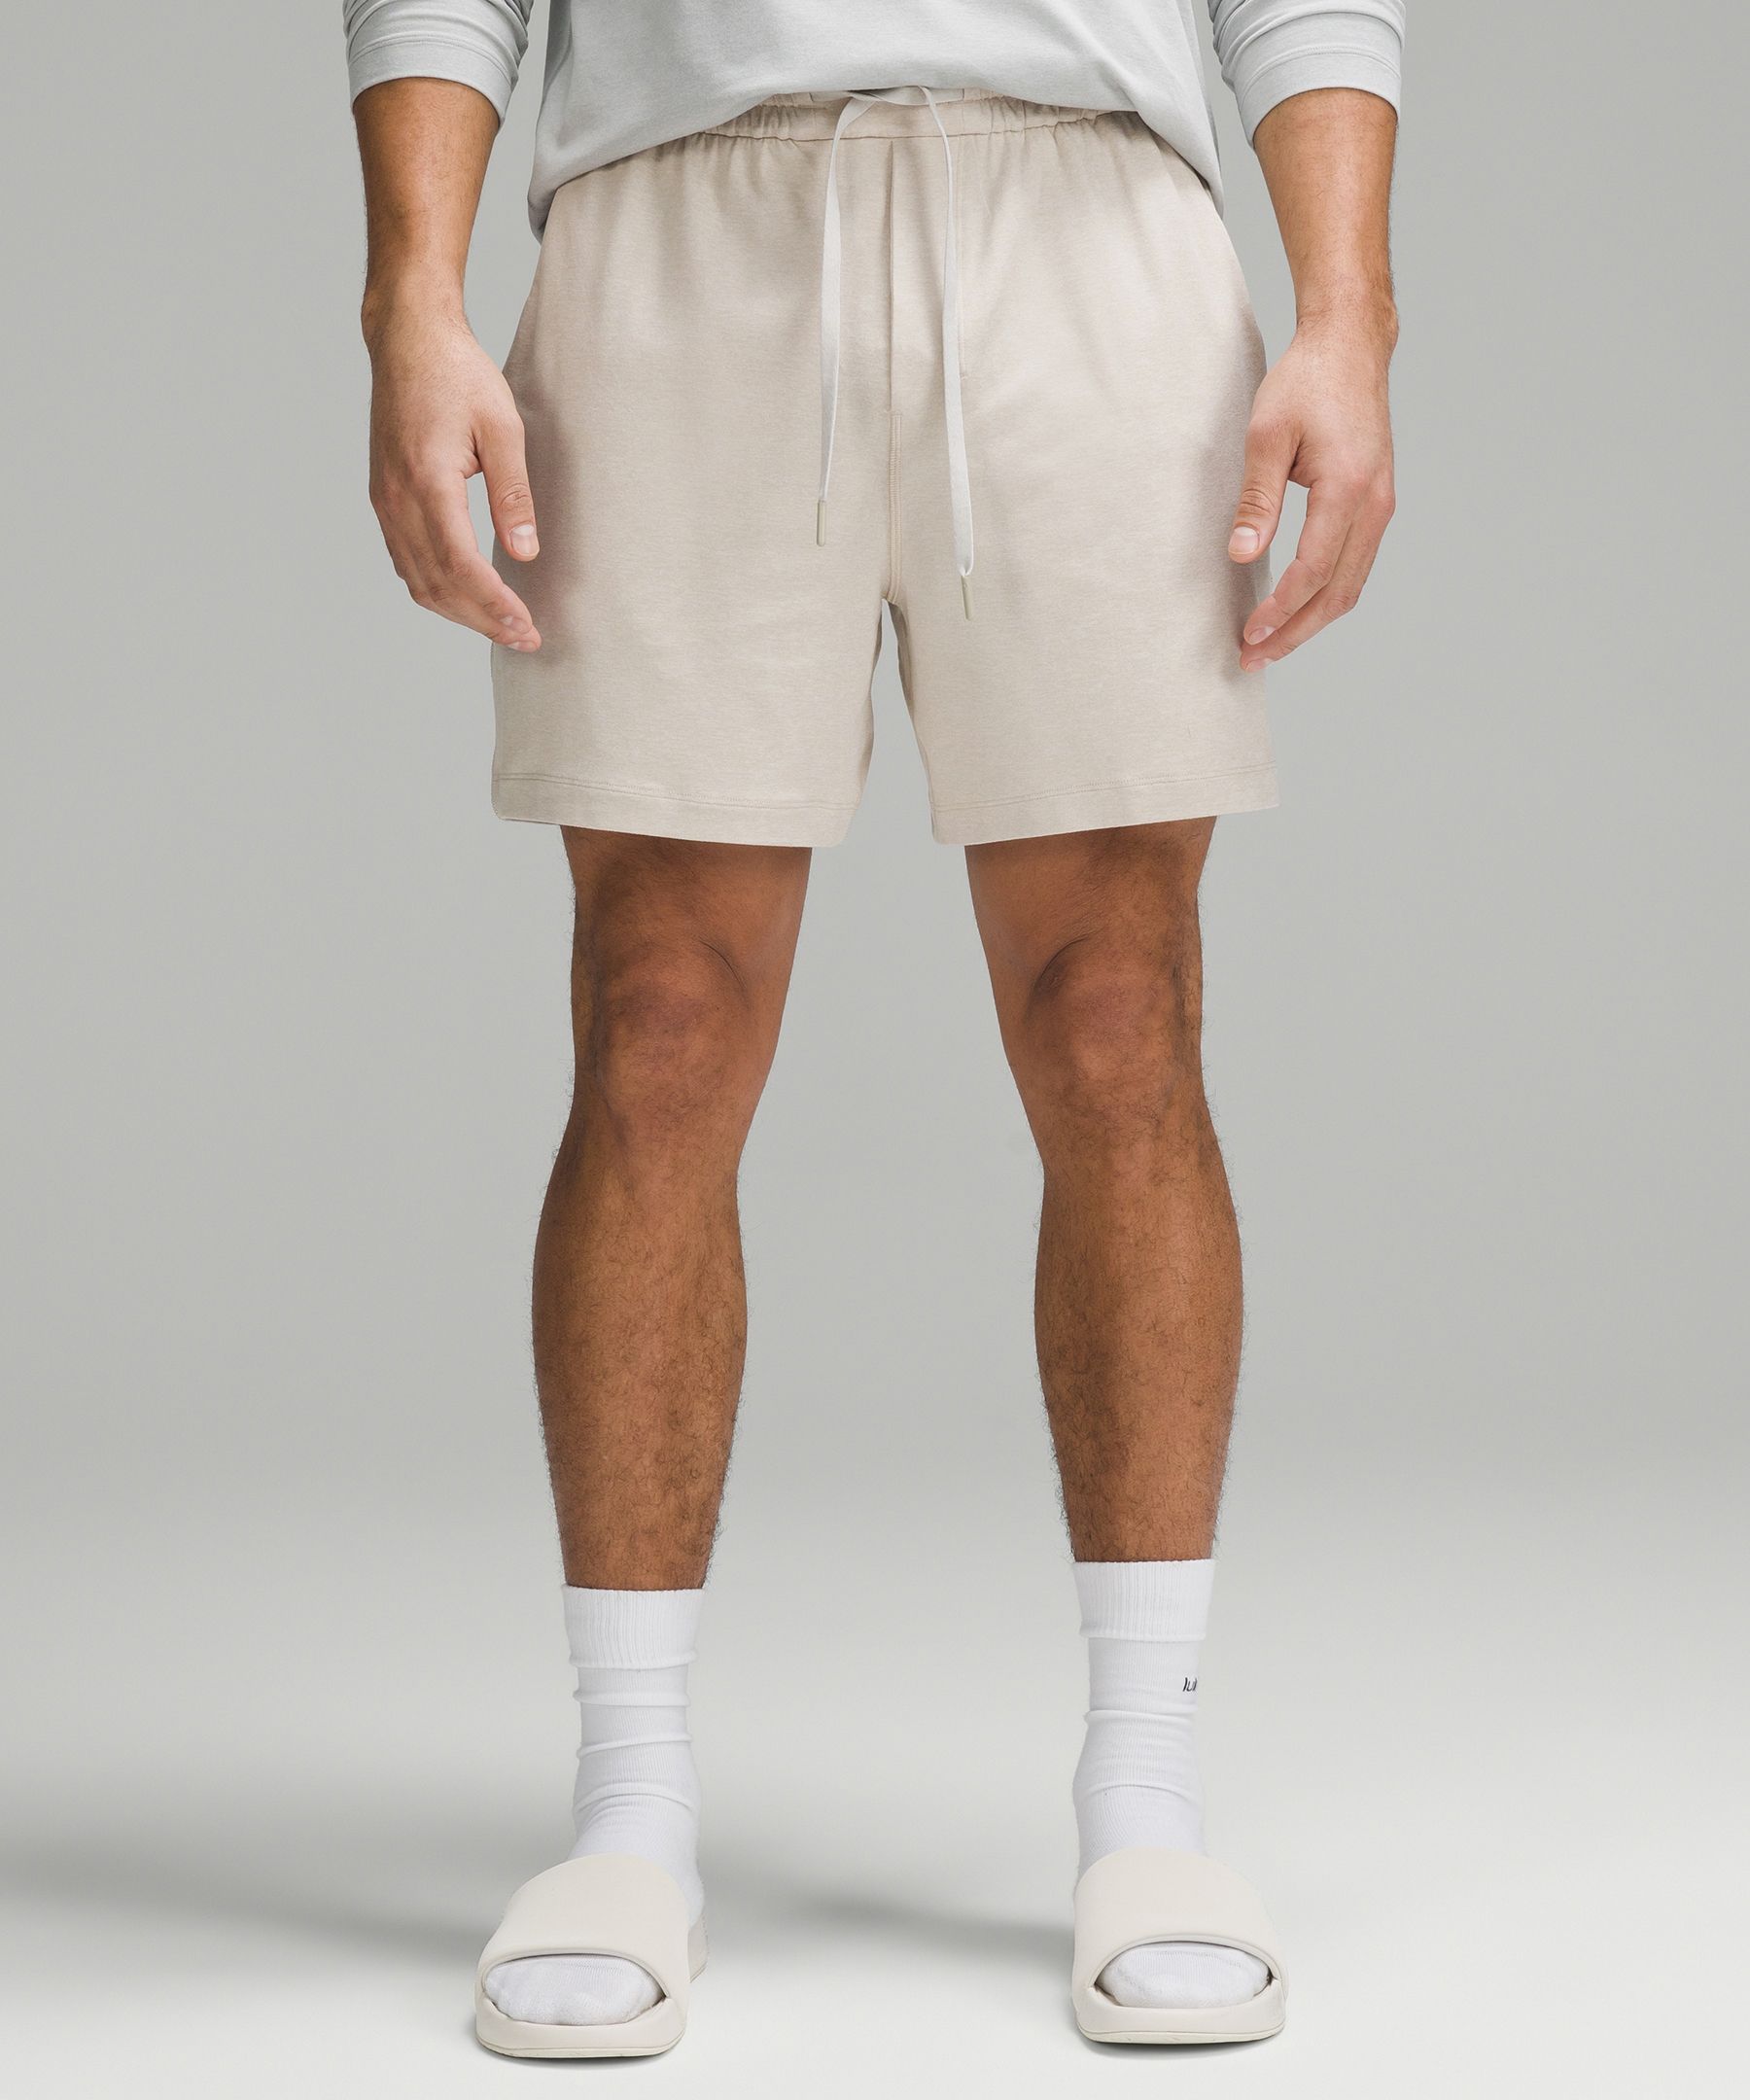 Lululemon Soft Jersey Shorts 5"